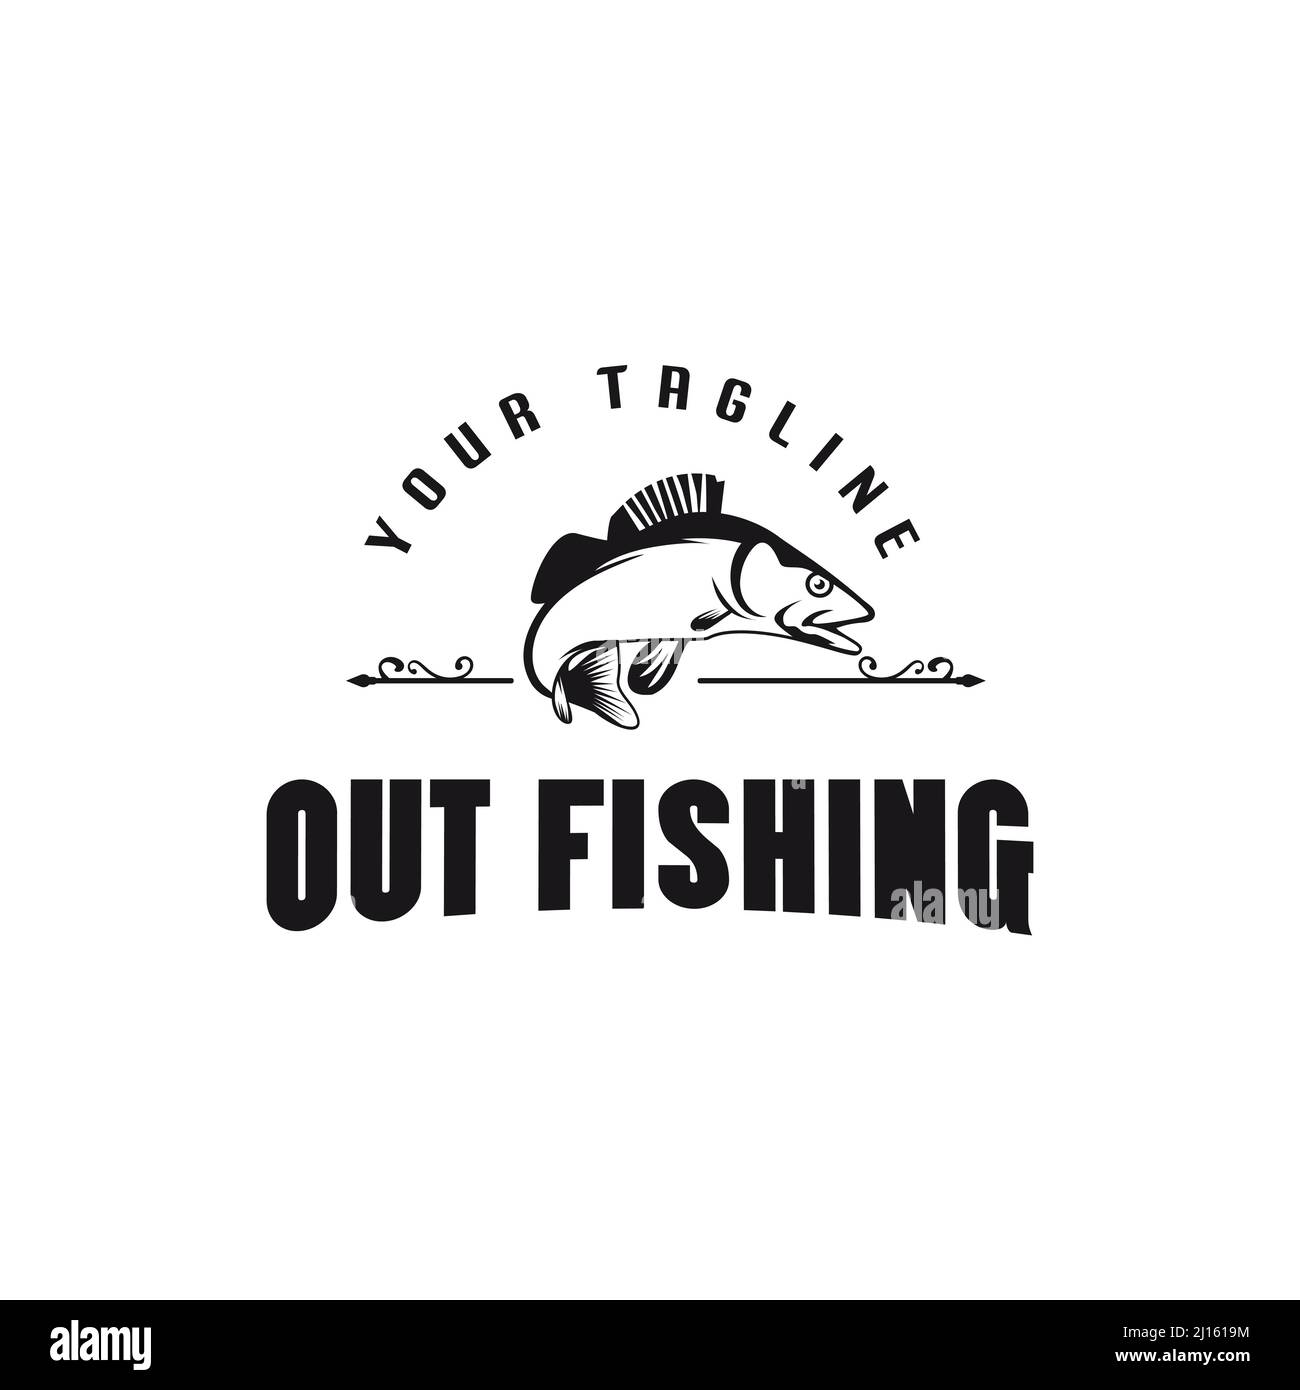 https://c8.alamy.com/comp/2J1619M/illustration-of-fish-hunter-black-fishing-logo-design-template-illustration-fishing-sport-logo-2J1619M.jpg